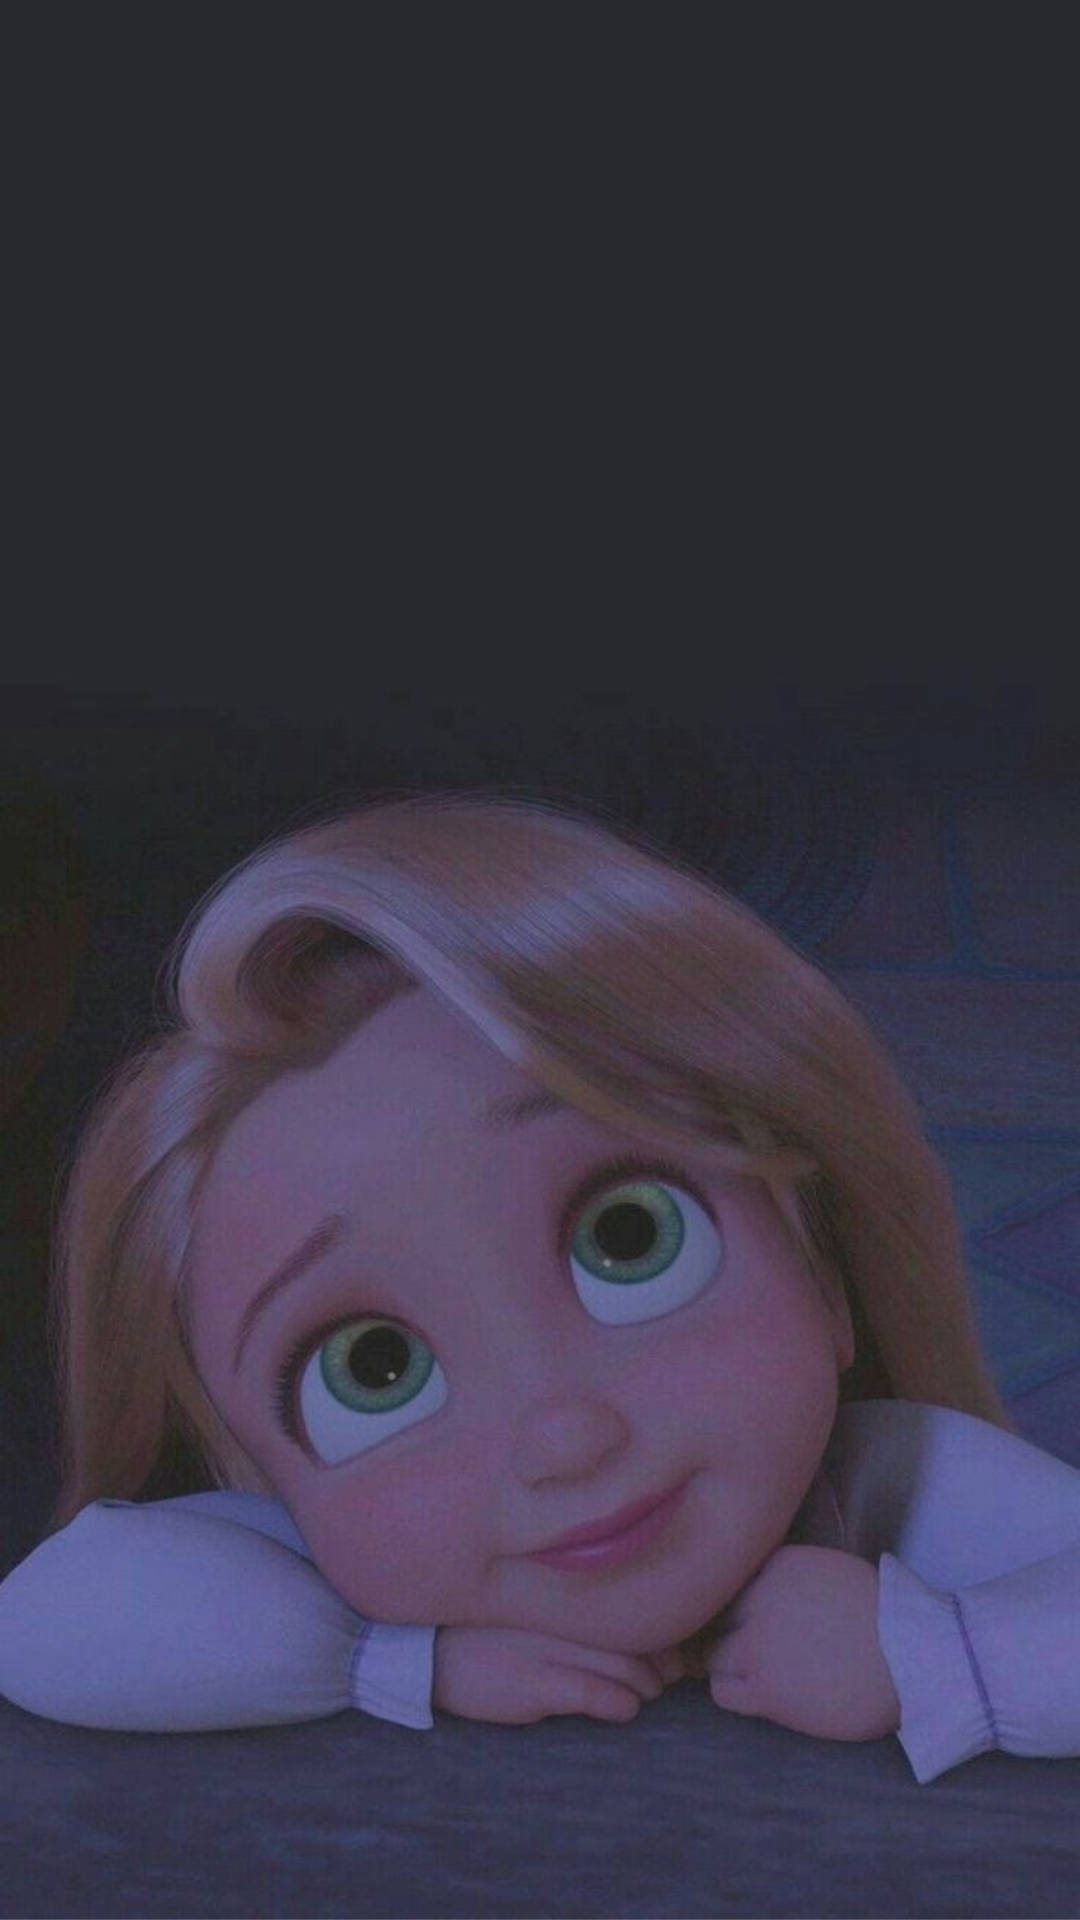 Baby Rapunzel From Disney Phone